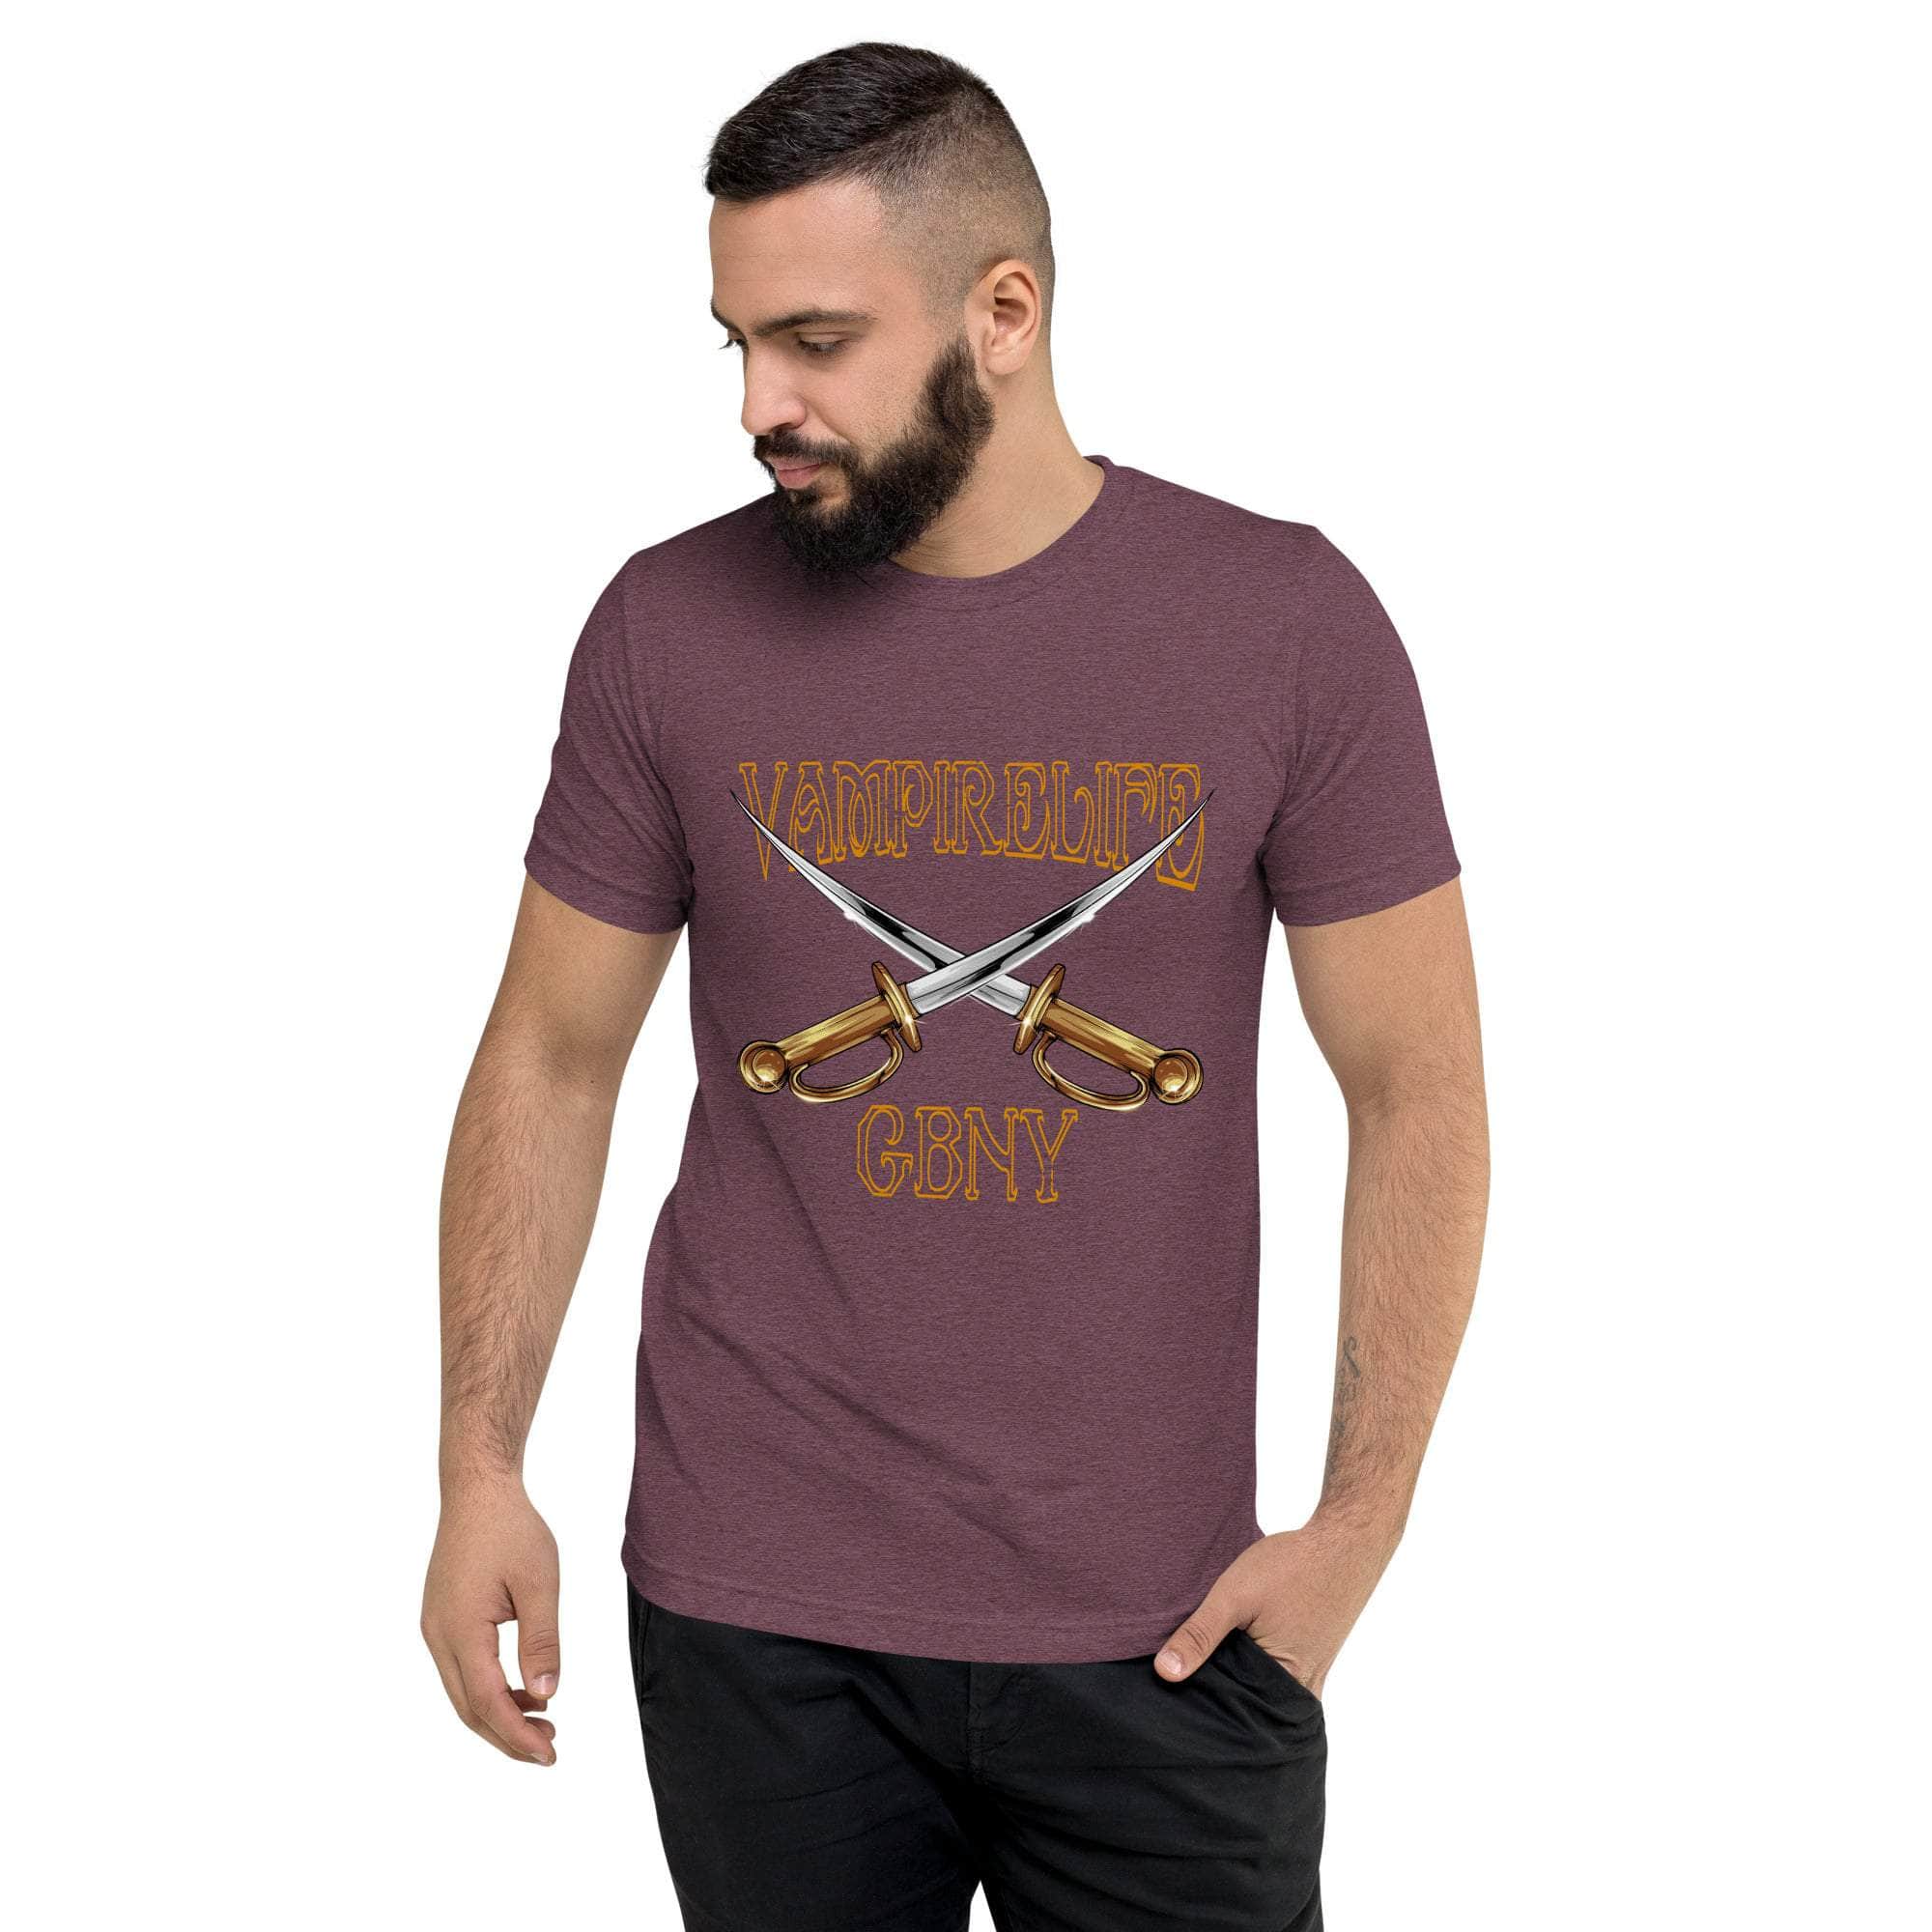 GBNY Maroon Triblend / XS Vamp Life X GBNY "Cross Swords" T-shirt - Men's 3322256_6544